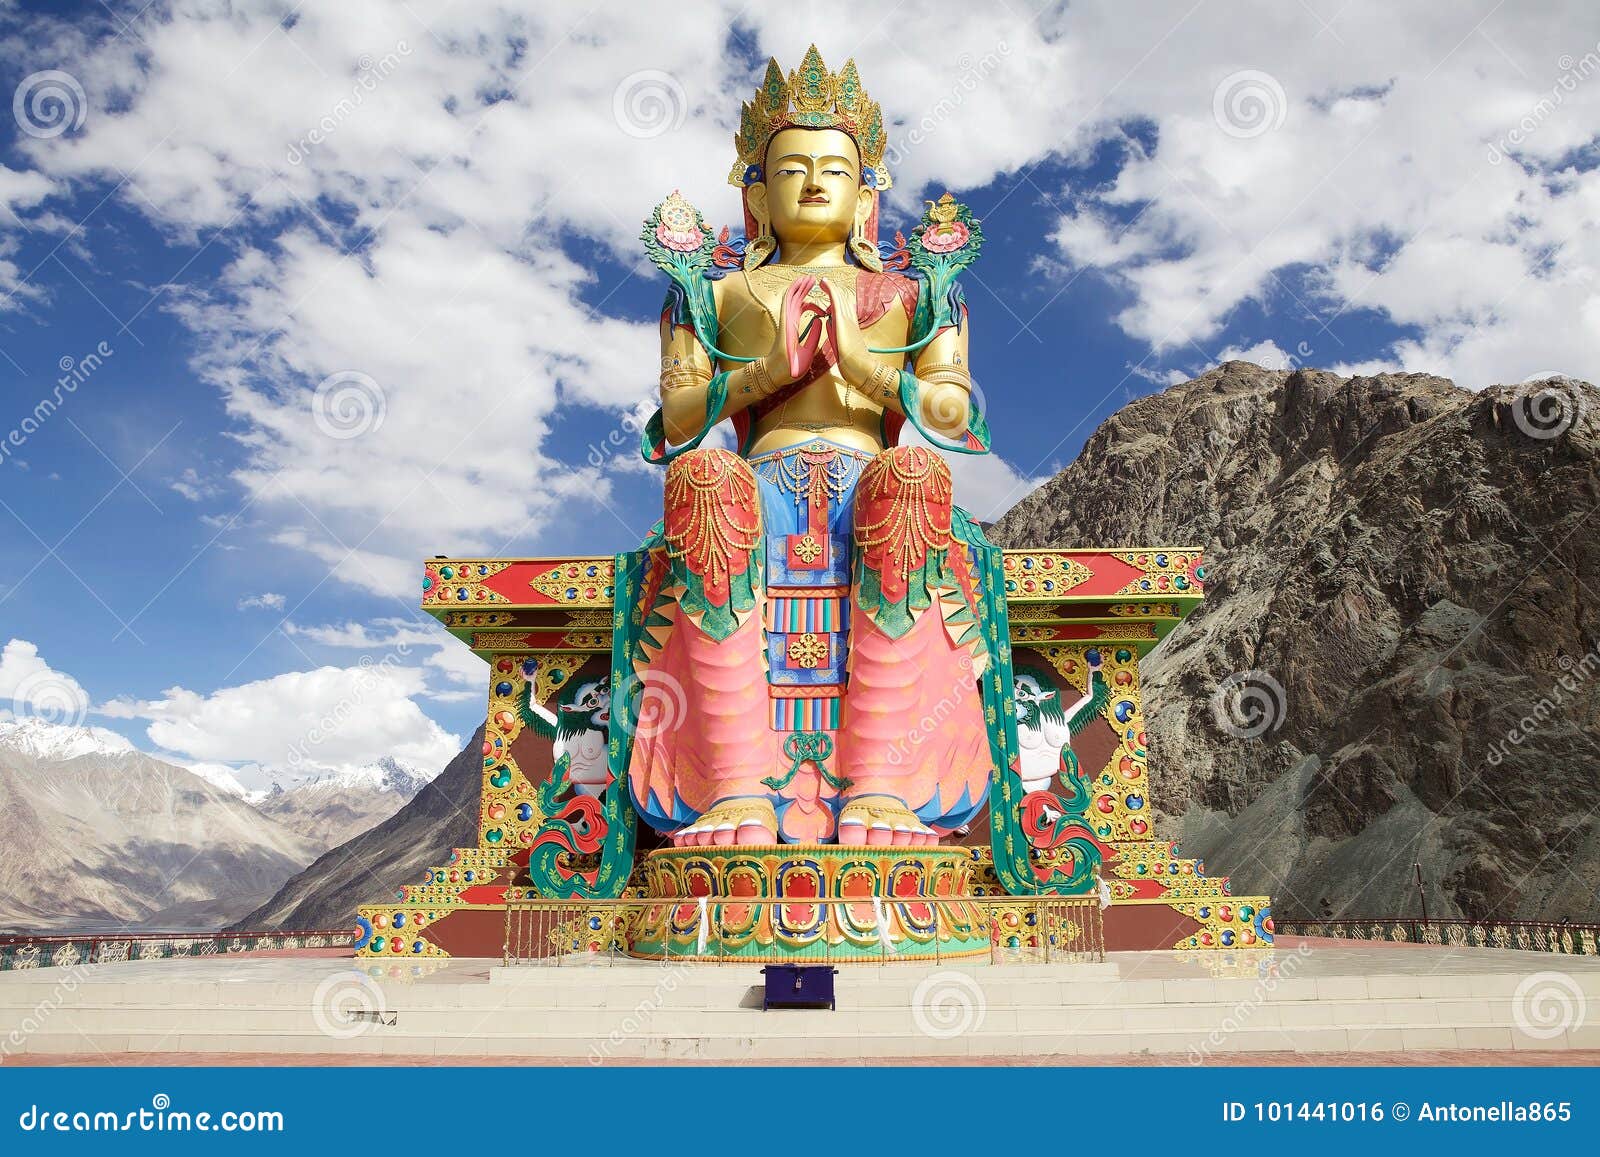 statue of buddha near diskit monastery in nubra valley, ladakh, india